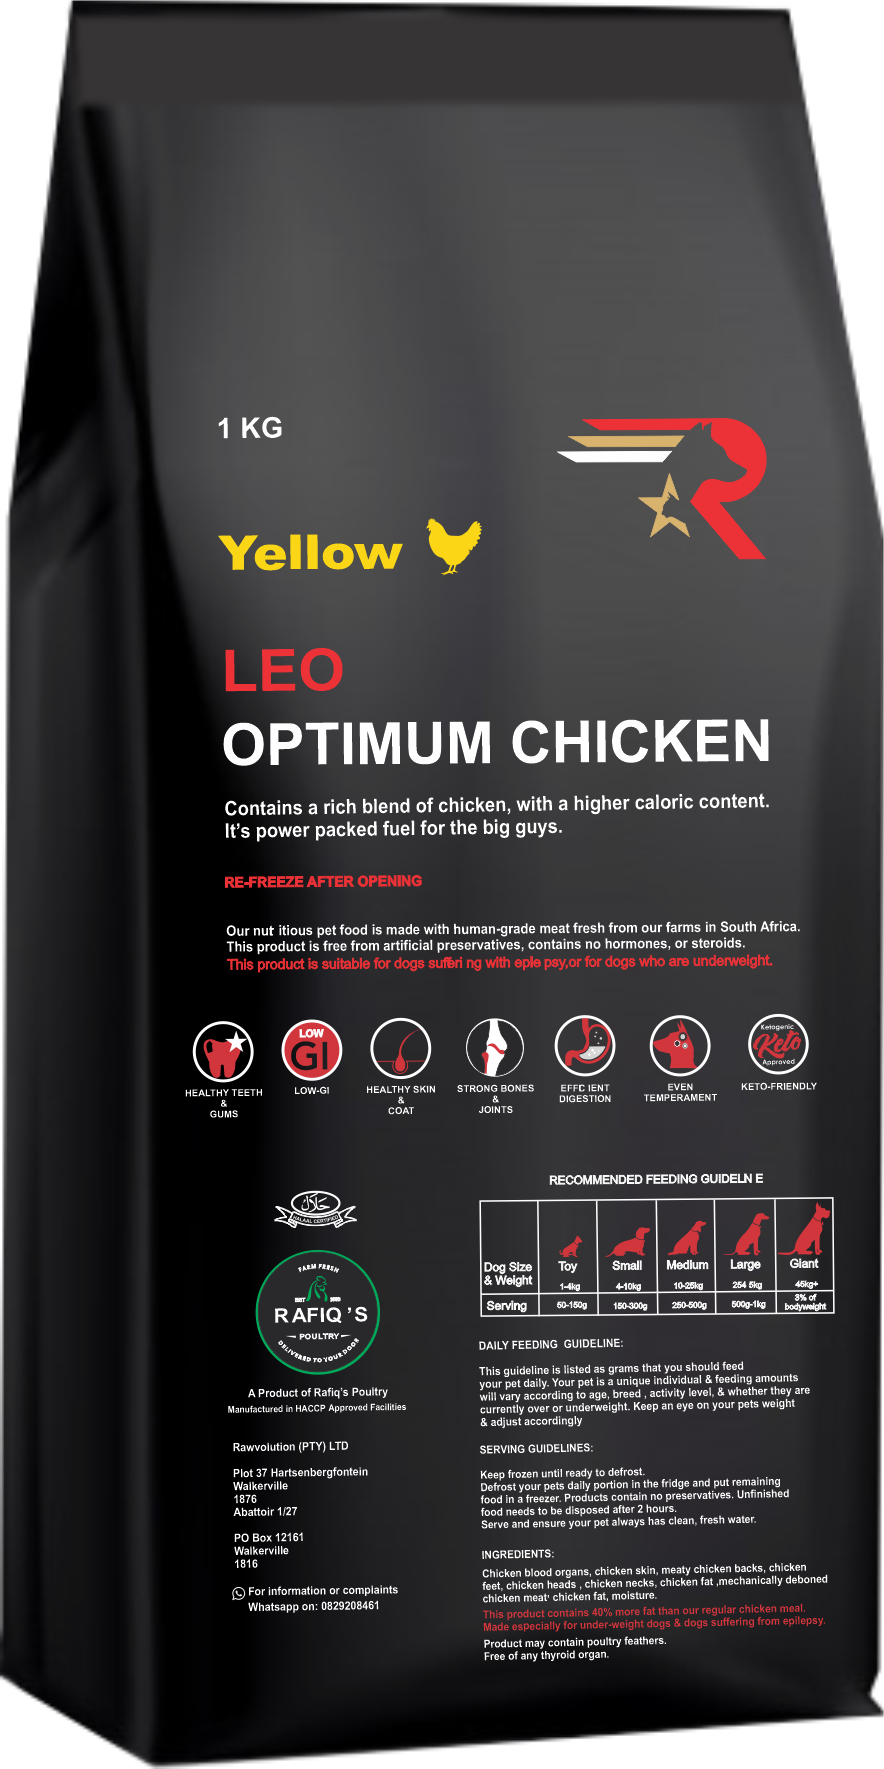 Leo - Optimum Chicken